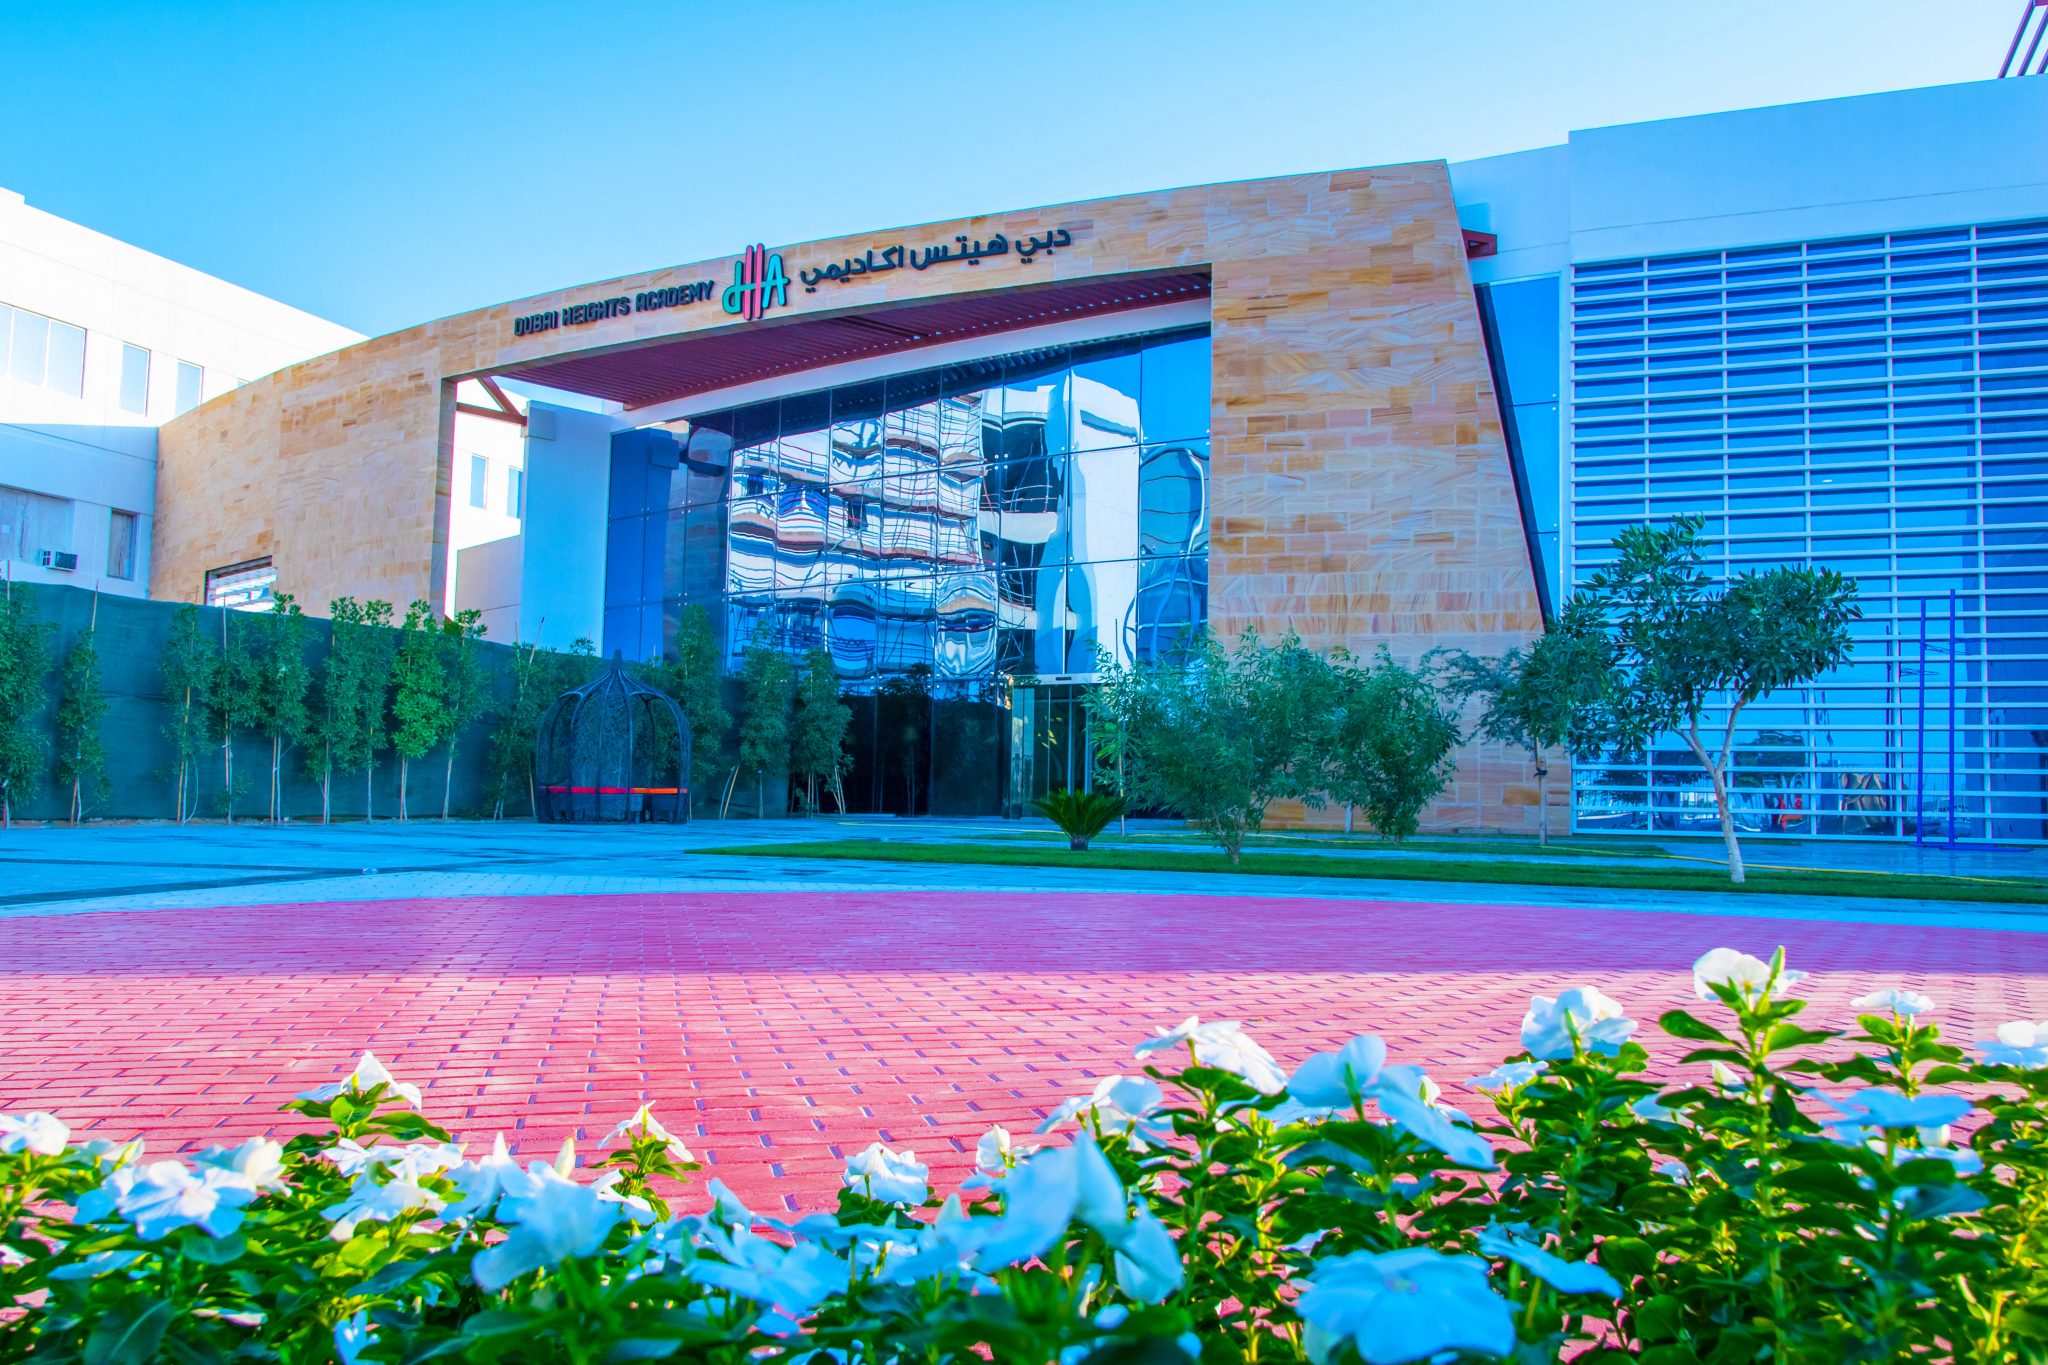 Photograph showing the prestigious entrance to Dubai Heights Academy in Dubai